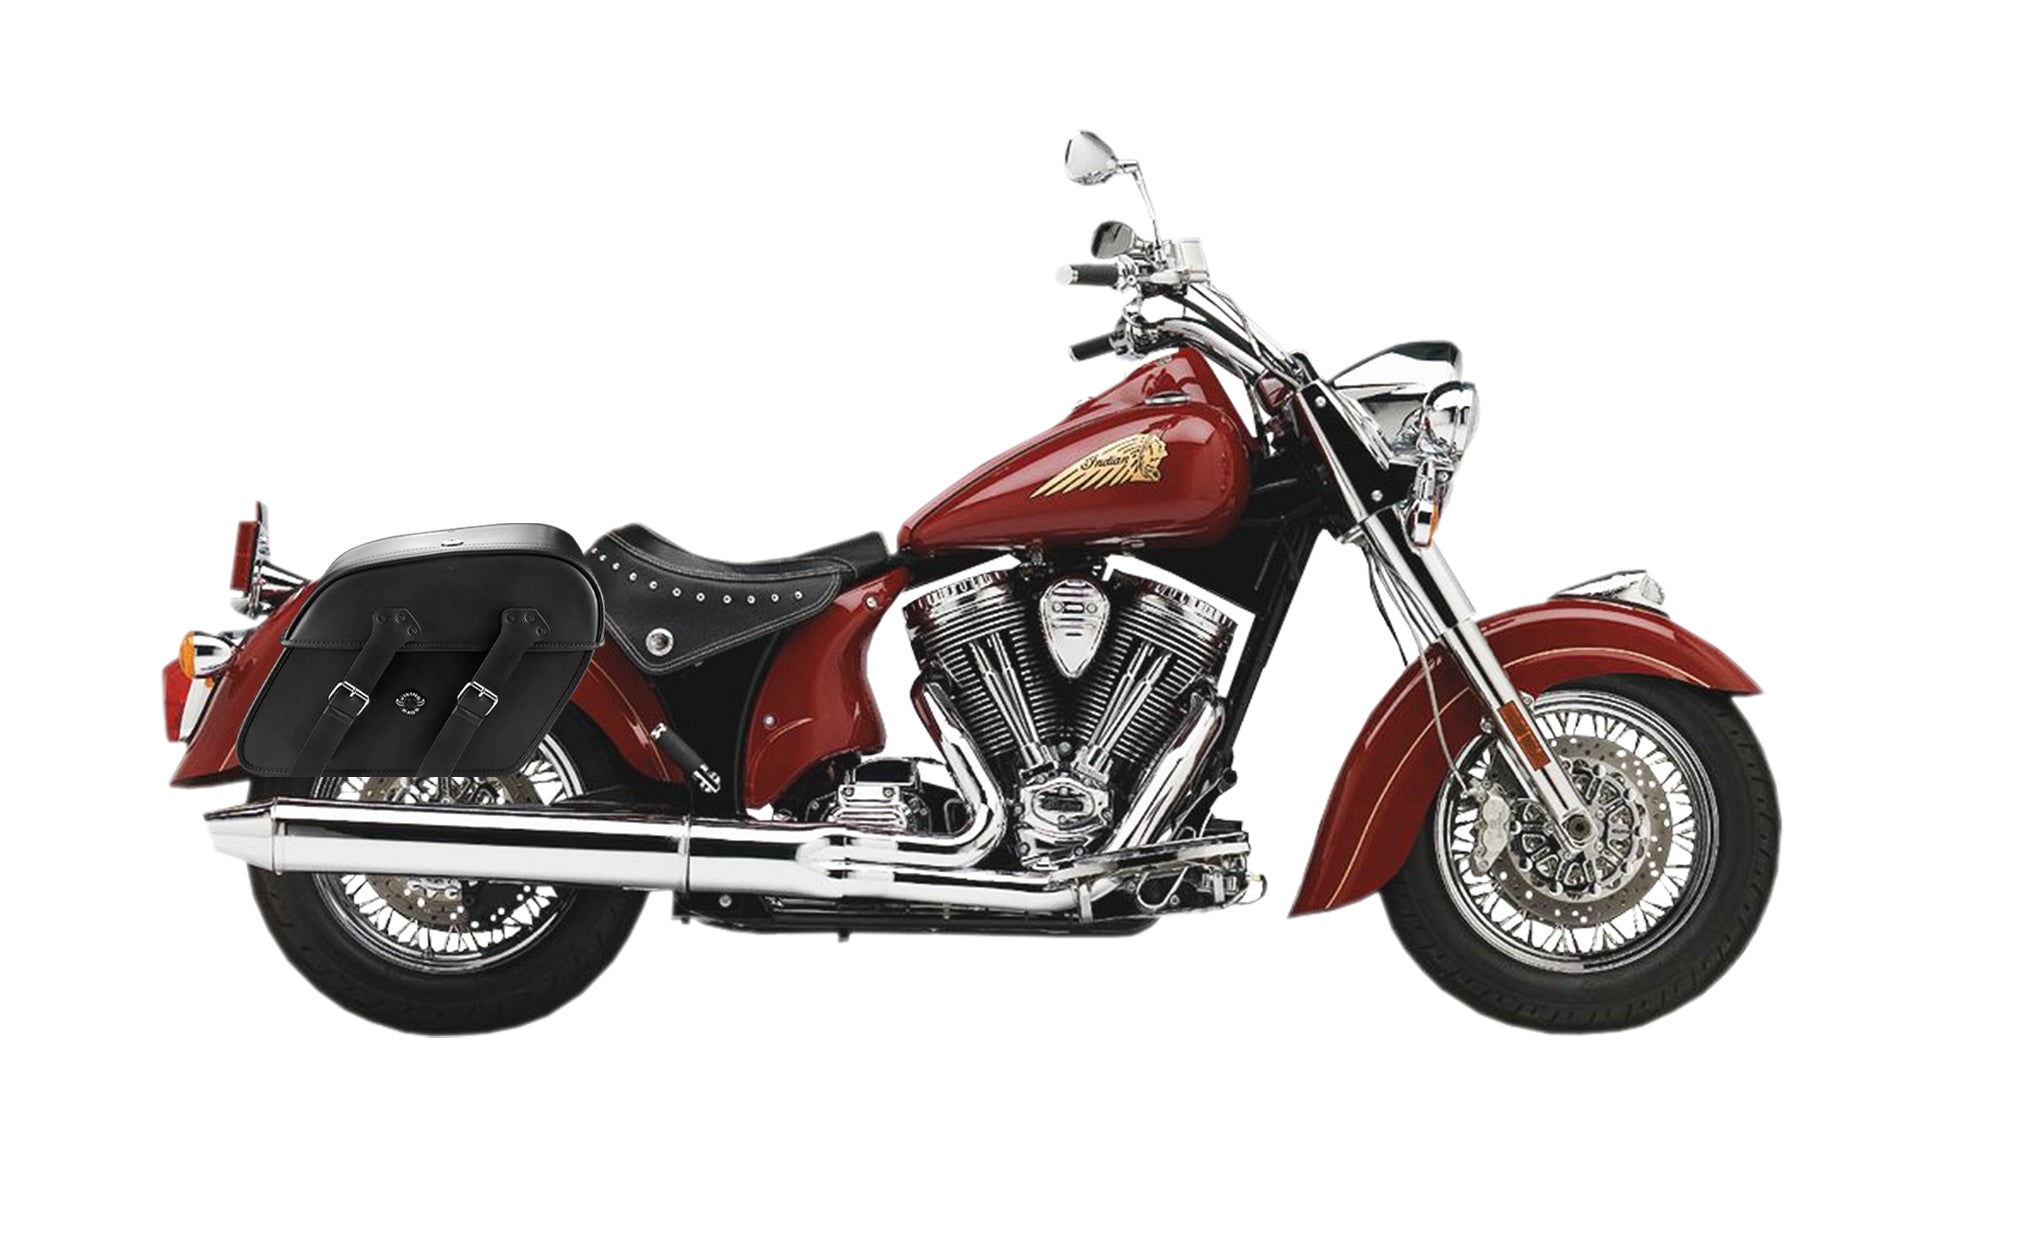 Viking Raven Large Indian Chief Standard Motorcycle Leather Saddlebags on Bike Photo @expand